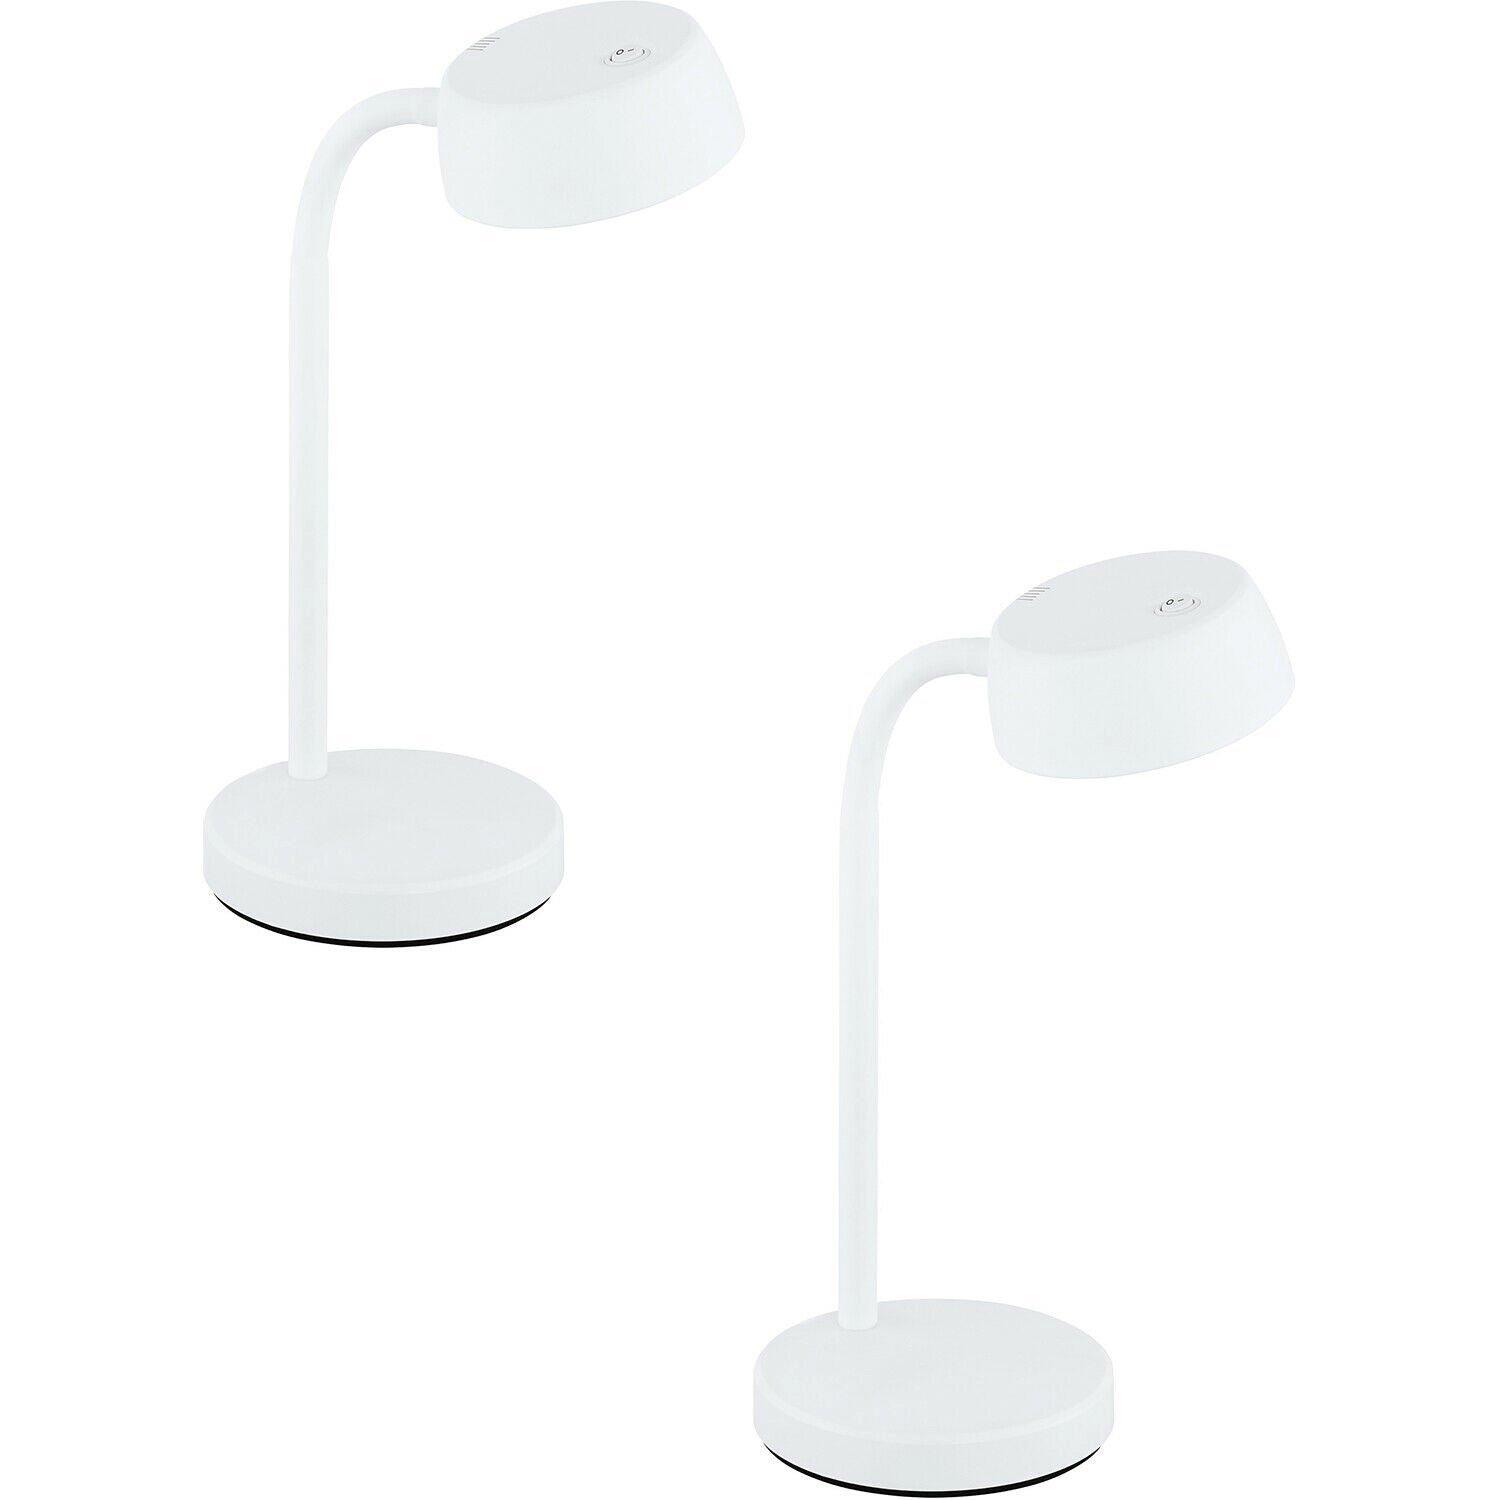 2 PACK Table Desk Lamp Colour Plain White Rocker Switch Bulb LED 4.5W Included